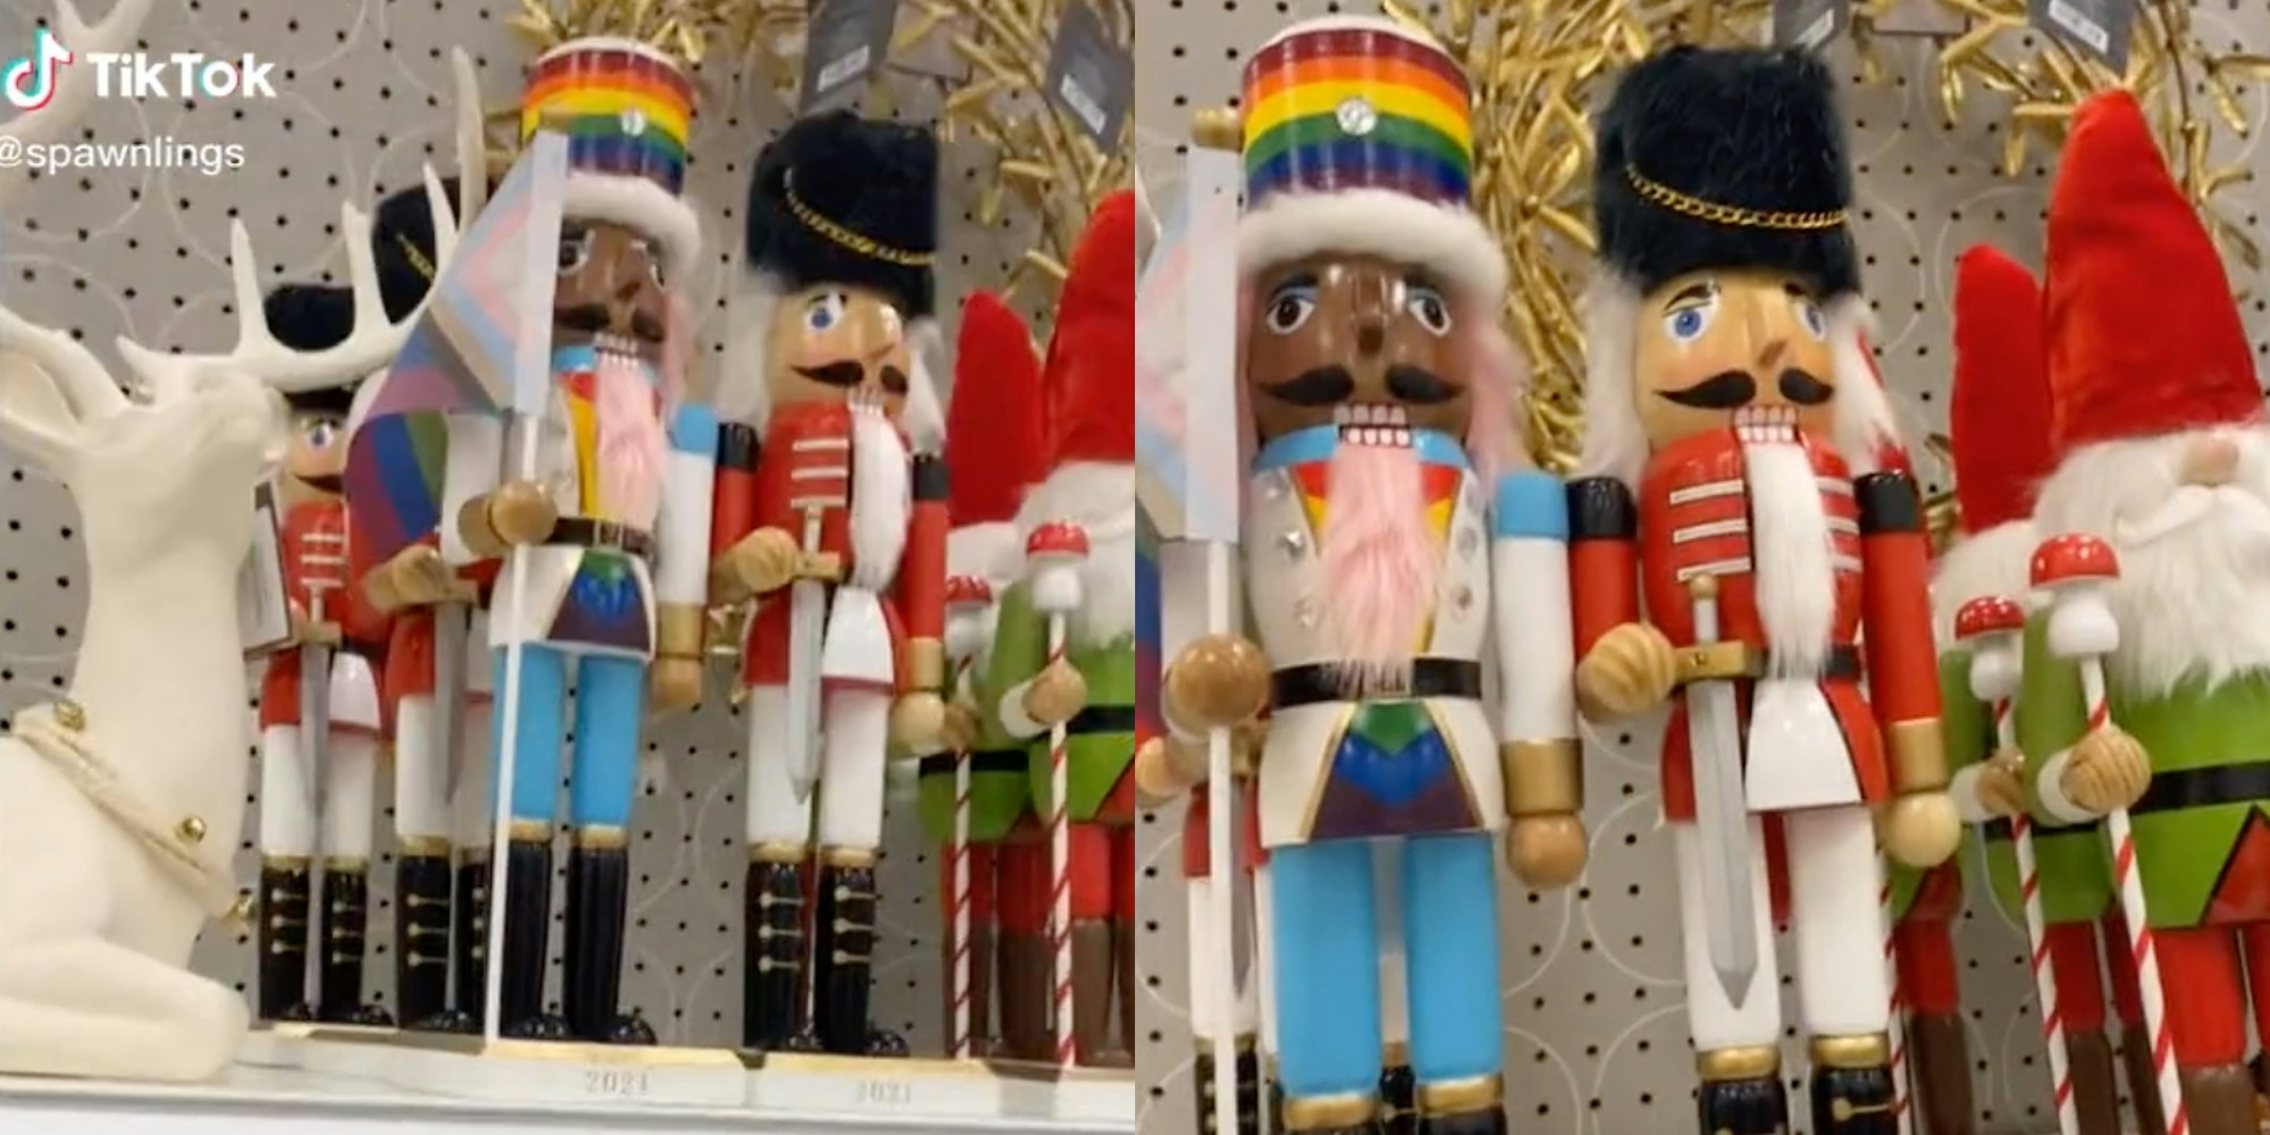 Target's Brown Nutcracker With Pride Flag Sparks Debate in Viral TikTok